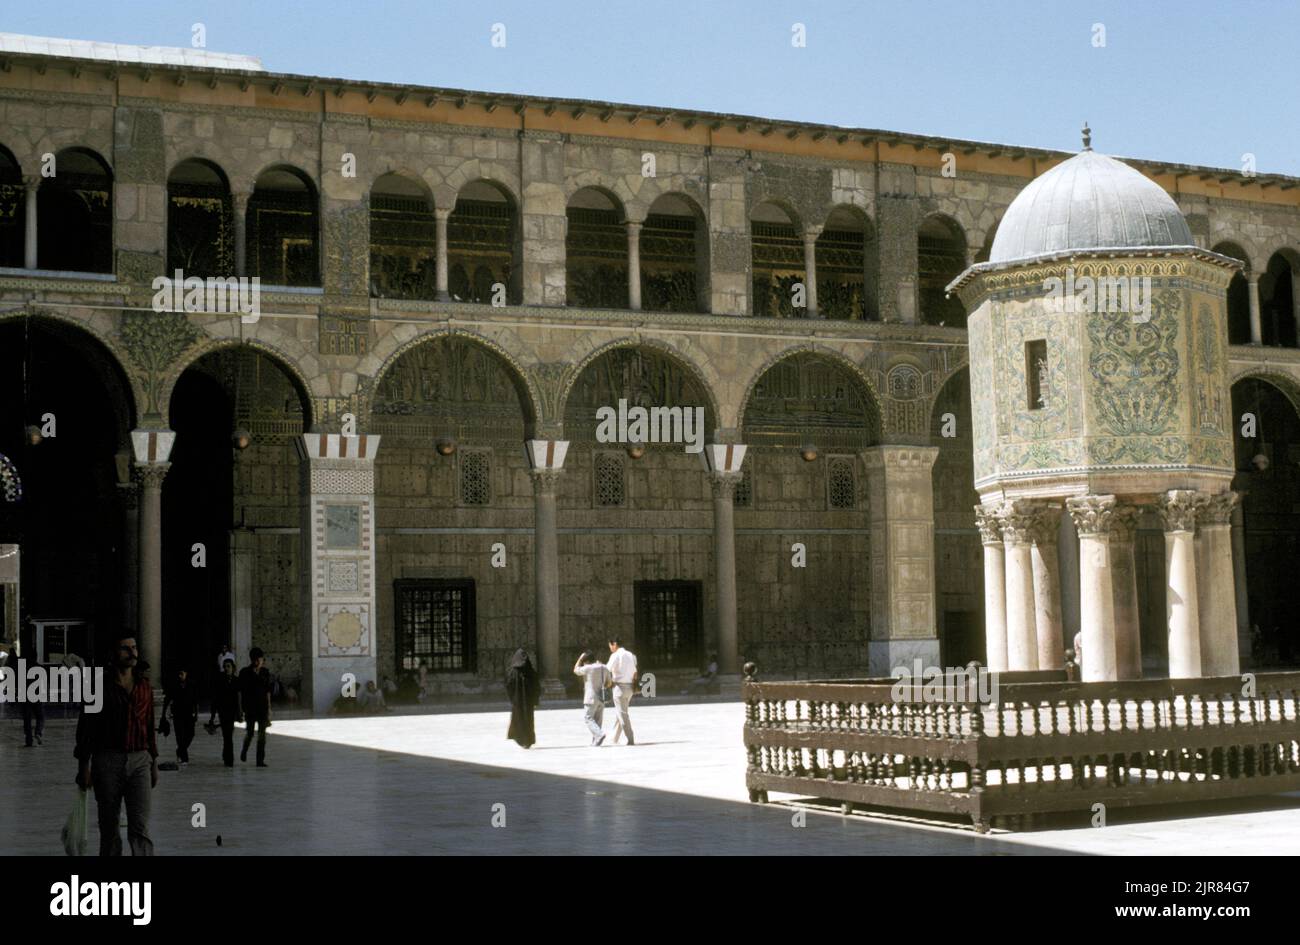 Dentro de la Mezquita Ummeya, Damasco, Siria, en 1985 Foto de stock